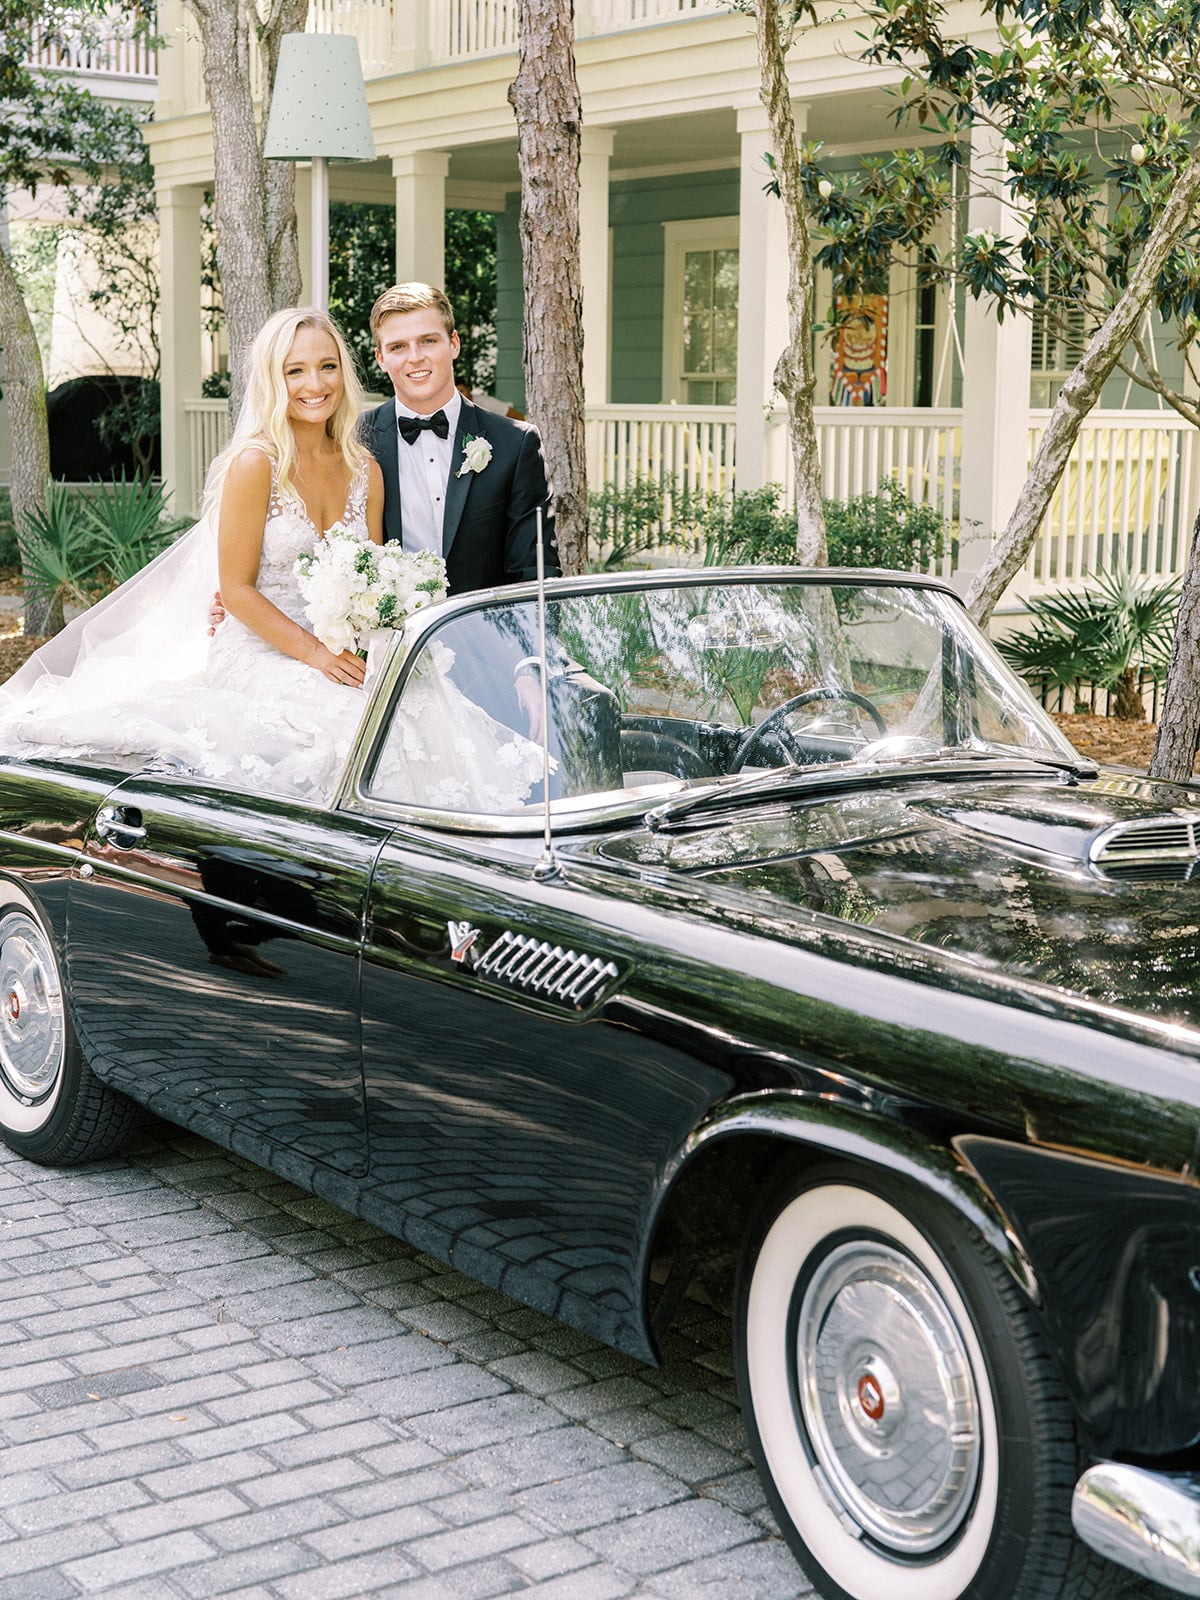 Bride and groom portraits on vintage car